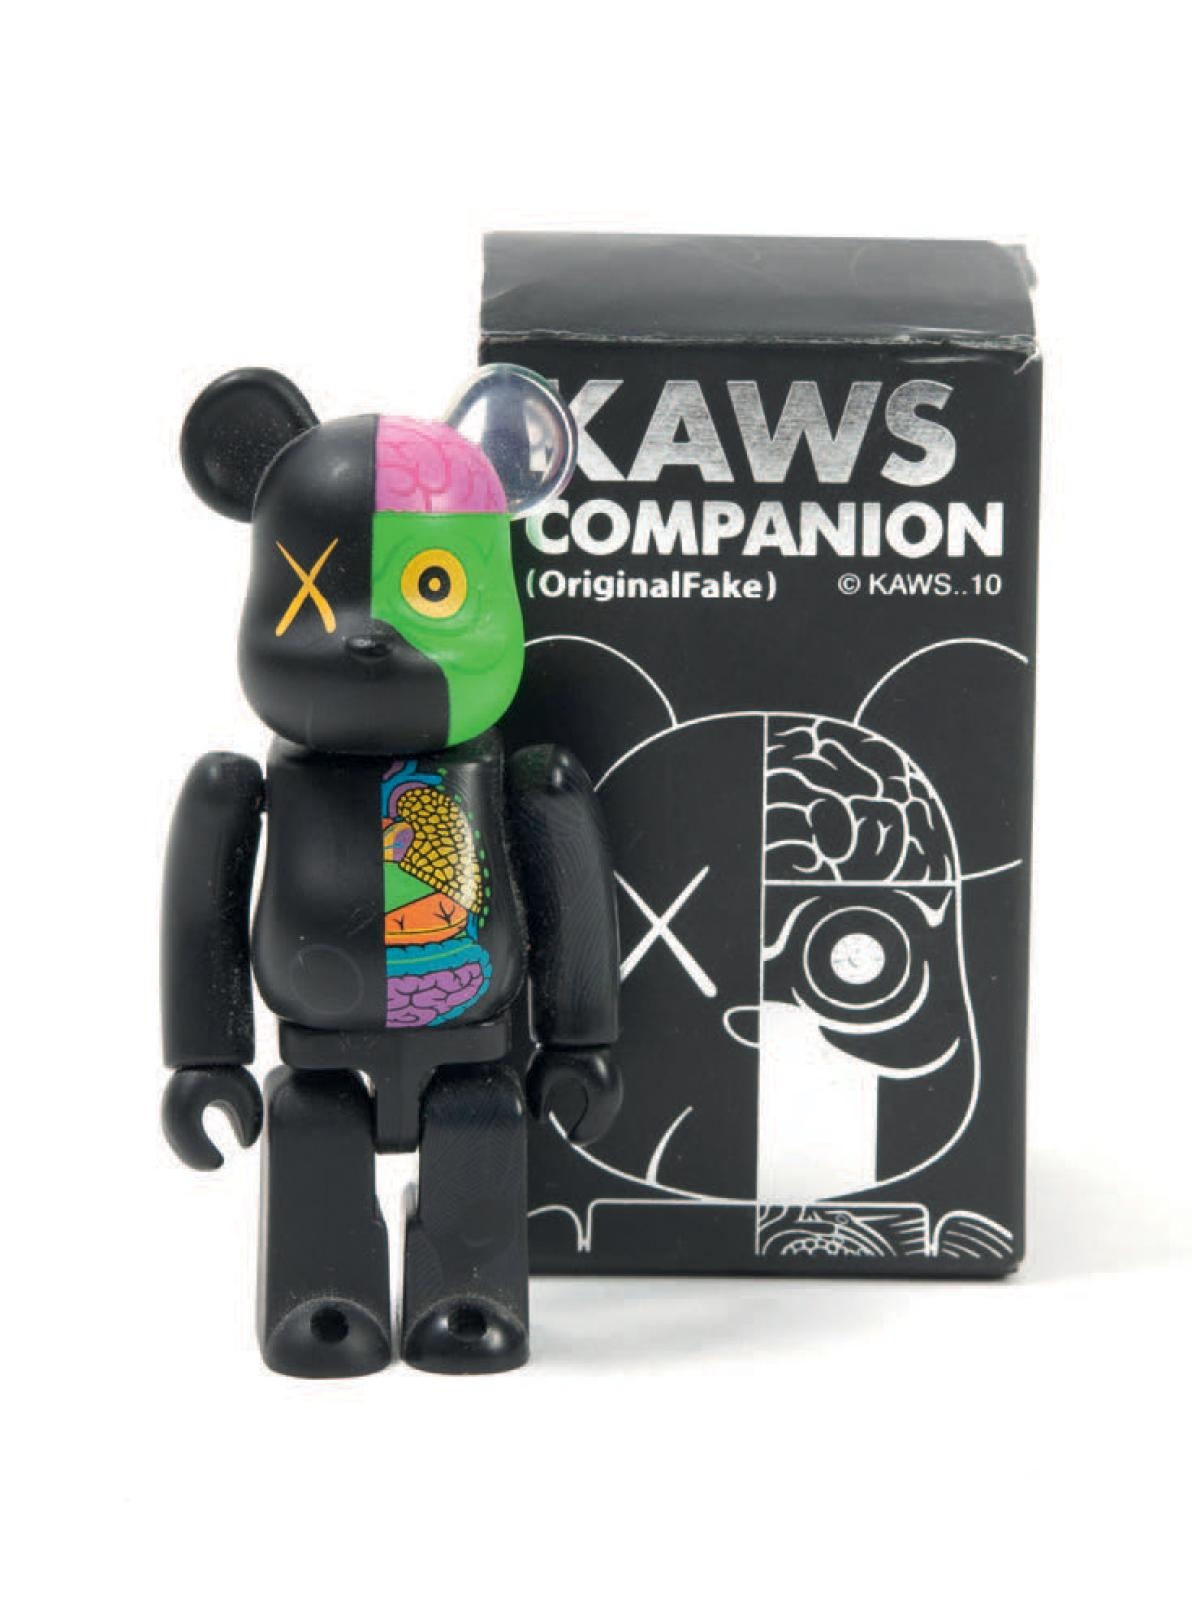 Kaws (Original Fake) Companion Vinyl 8 Inch Figure with box black